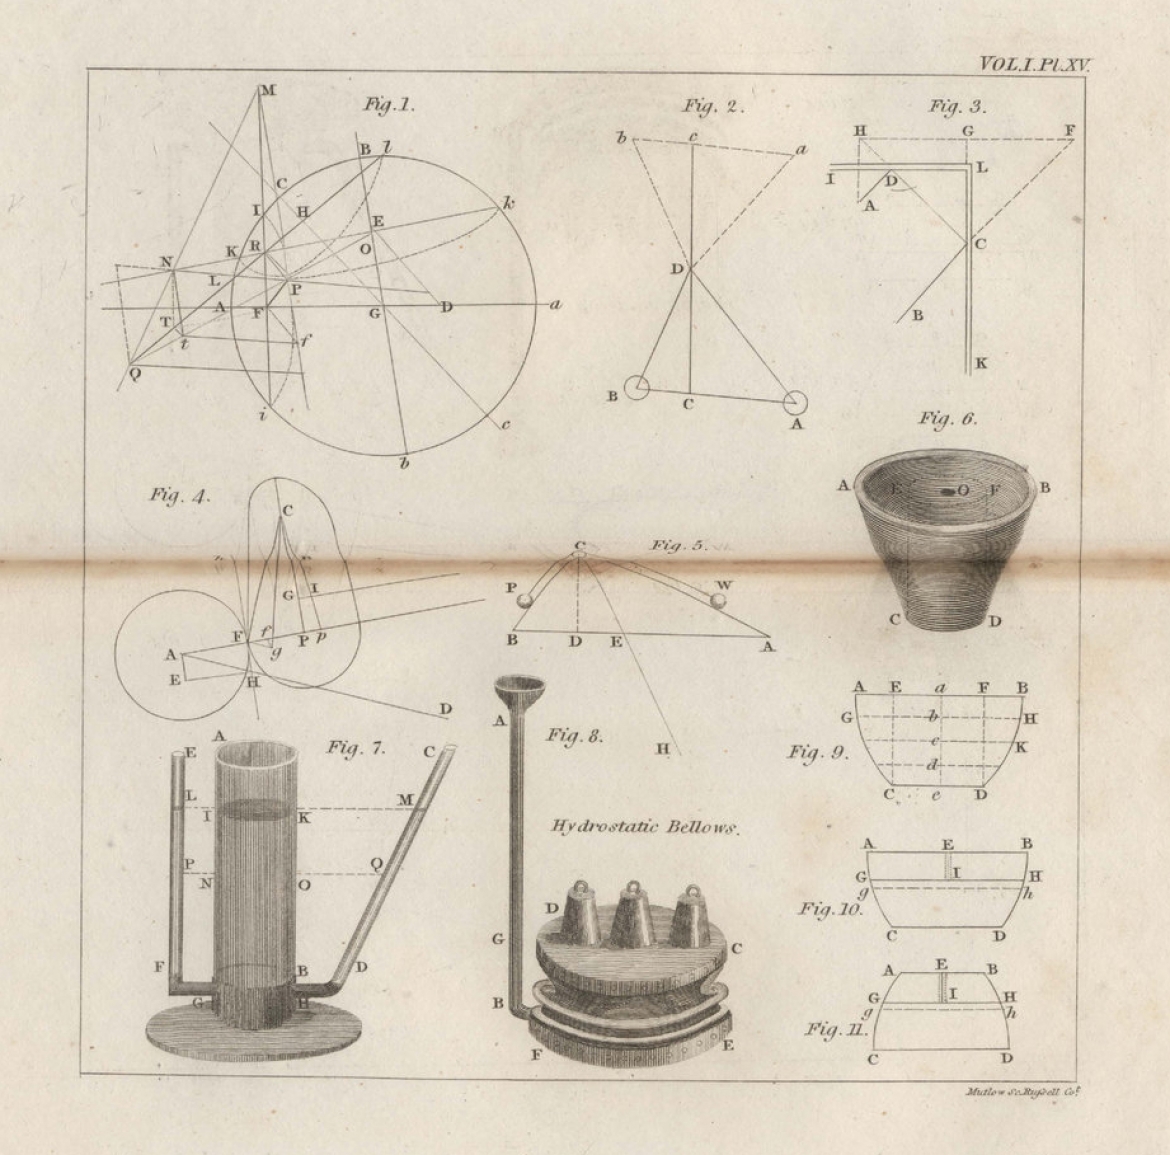 Olinthus Gregory. A treatise of mechanics... Vol. 3. Plates. London, 1826 [TJ145.G8 1826]